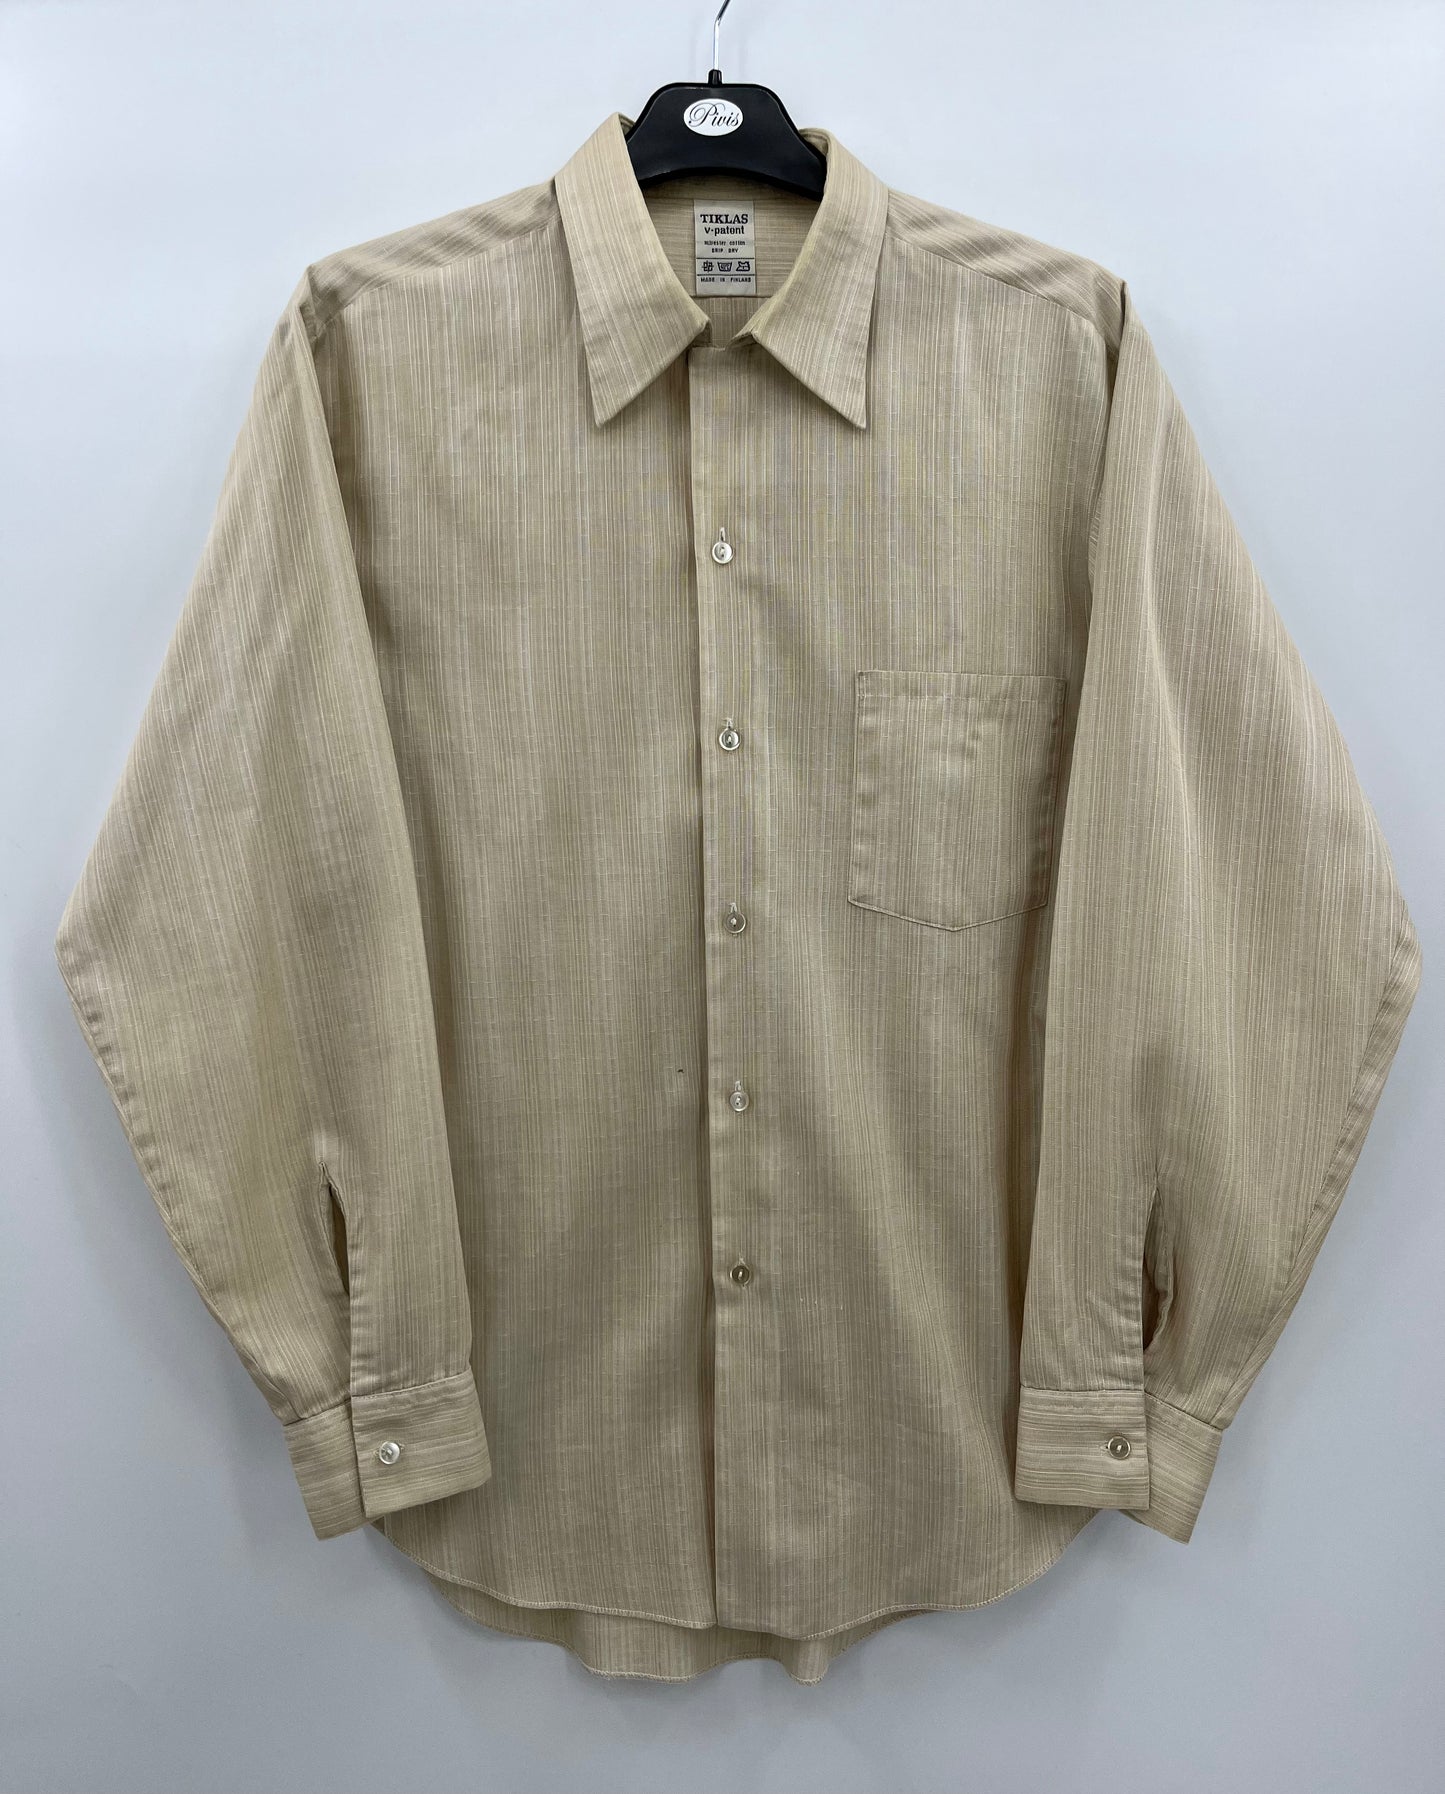 Tiklas, pellavanvärinen miesten paita, 70-luku, koko S-M